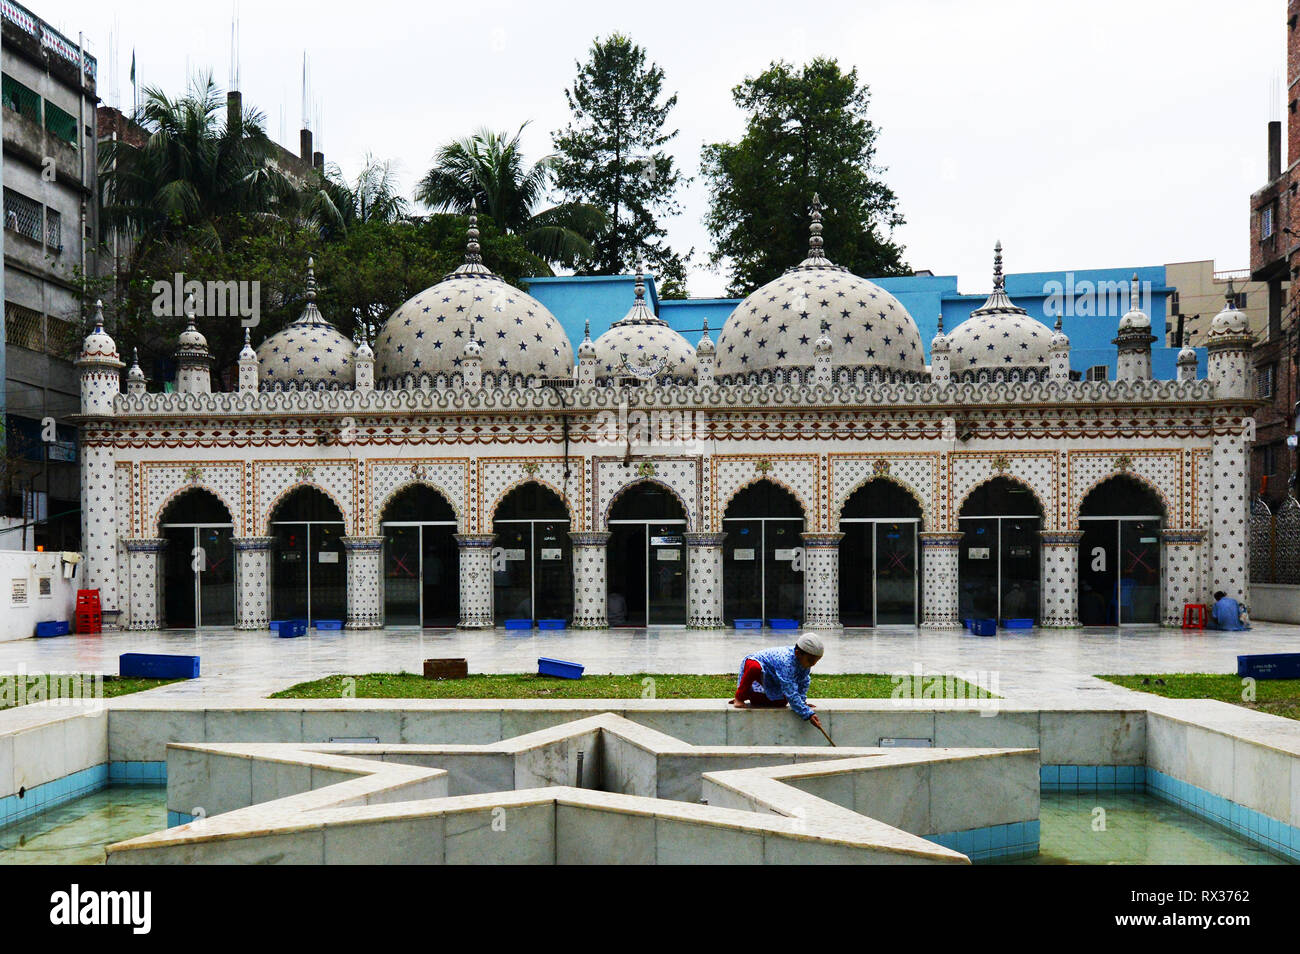 La splendida moschea di Star in Armanitola, Dhaka, Bangladesh. Foto Stock